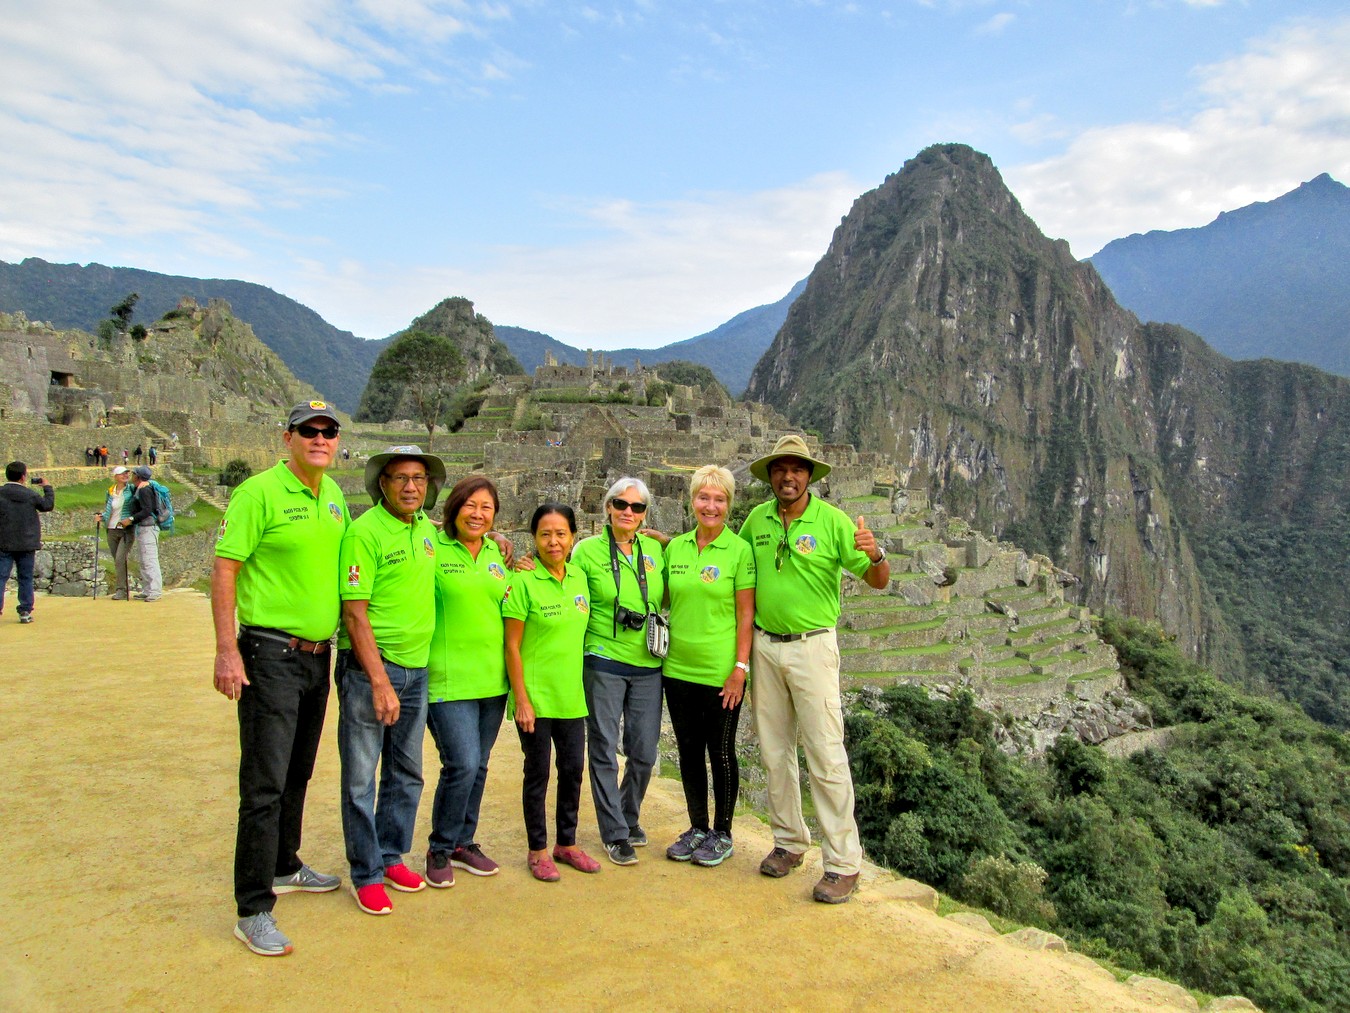 Machu Picchu tourism